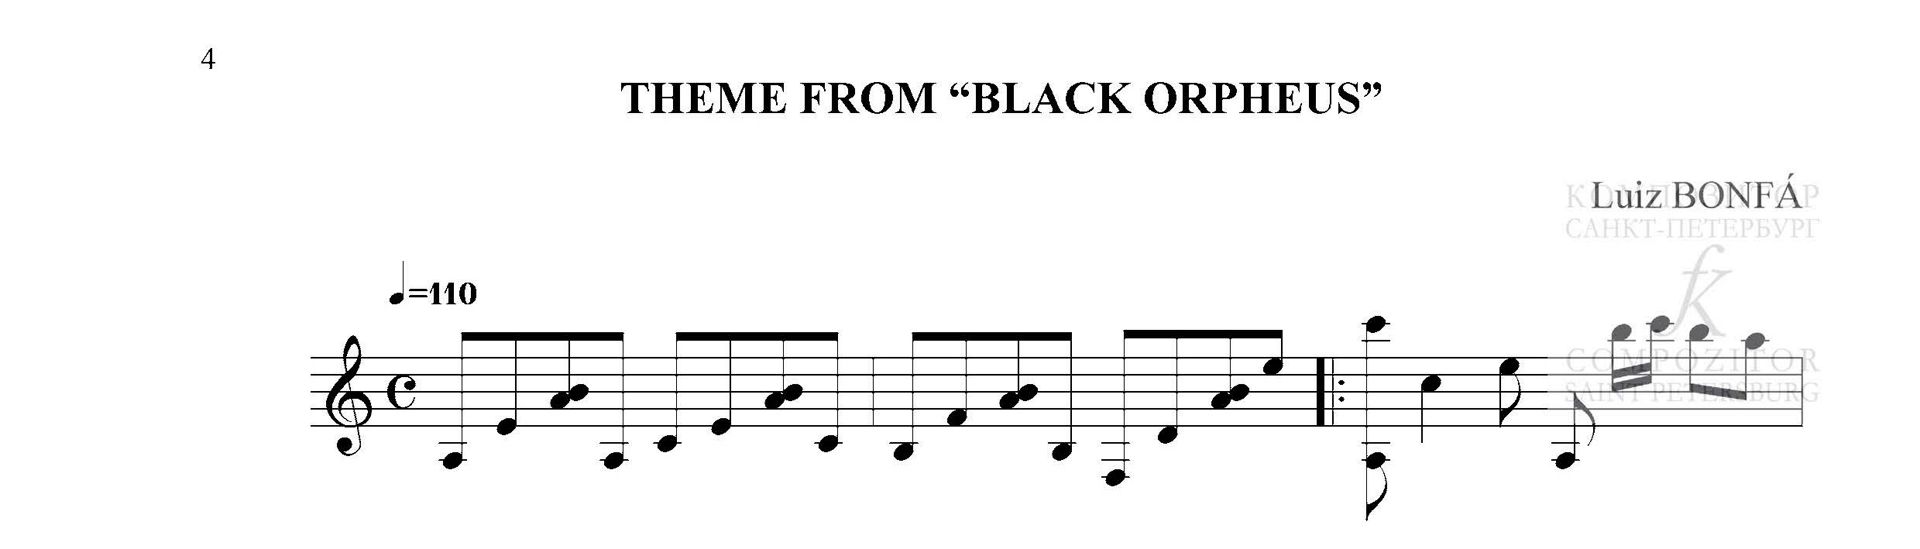 Luiz Bonfá. Theme from “BLACK ORPHEUS”. Переложения для гитары